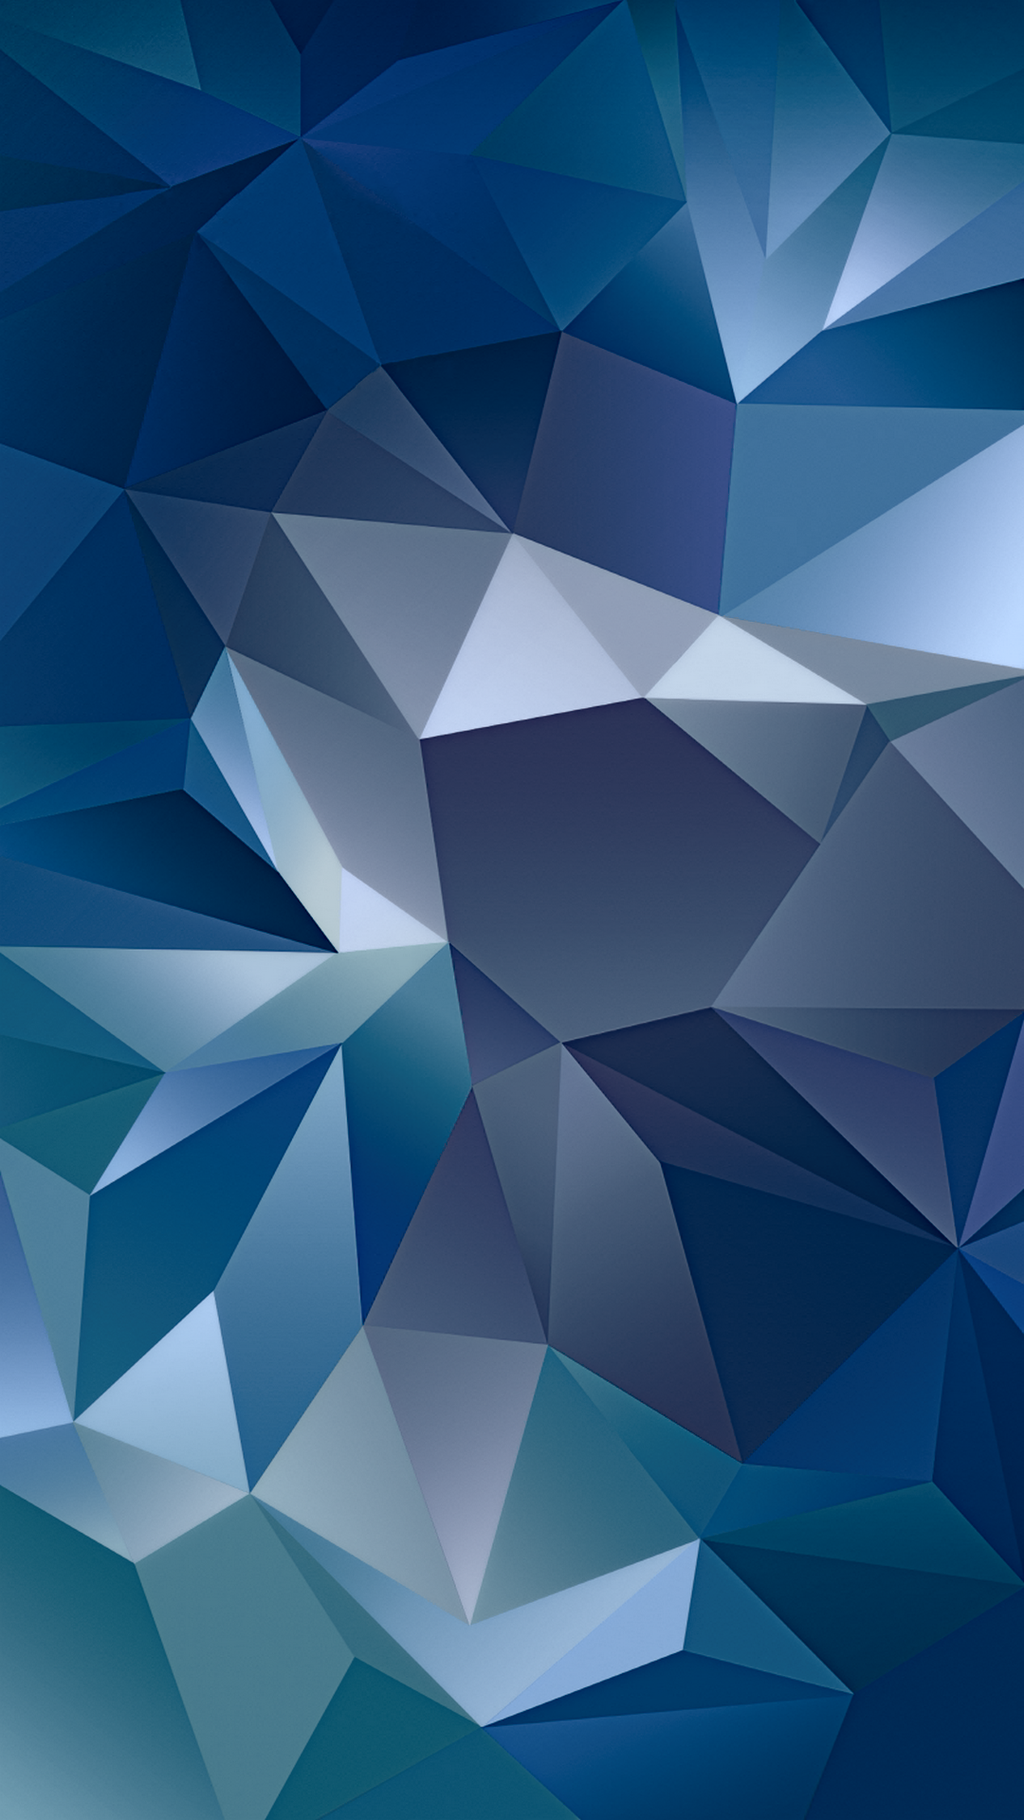 j5 2016 배경 화면,푸른,무늬,아쿠아,디자인,삼각형